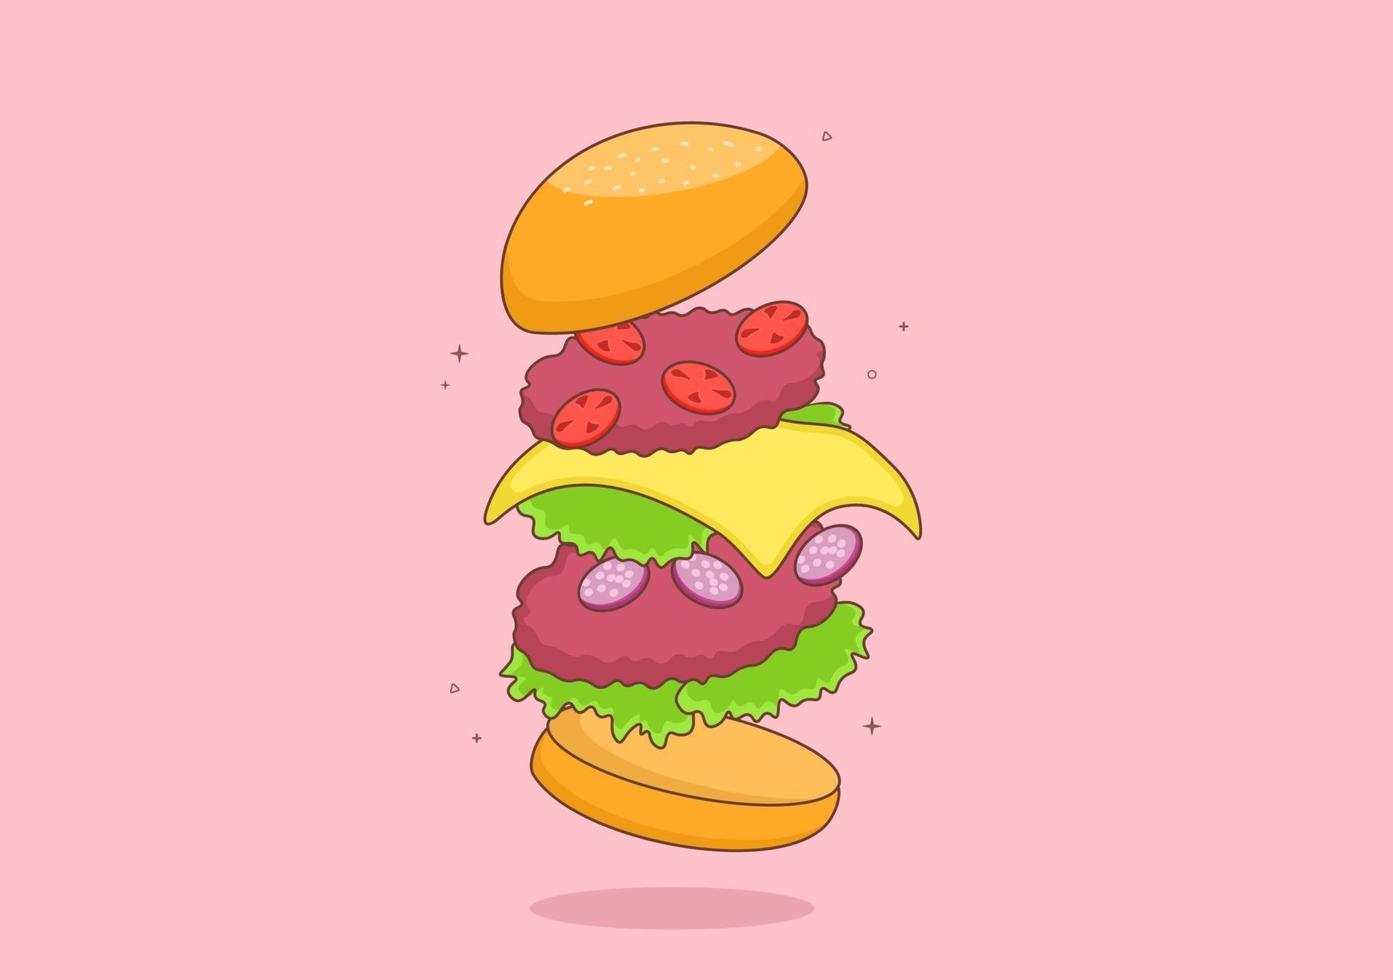 Burger Fast food Background Vector